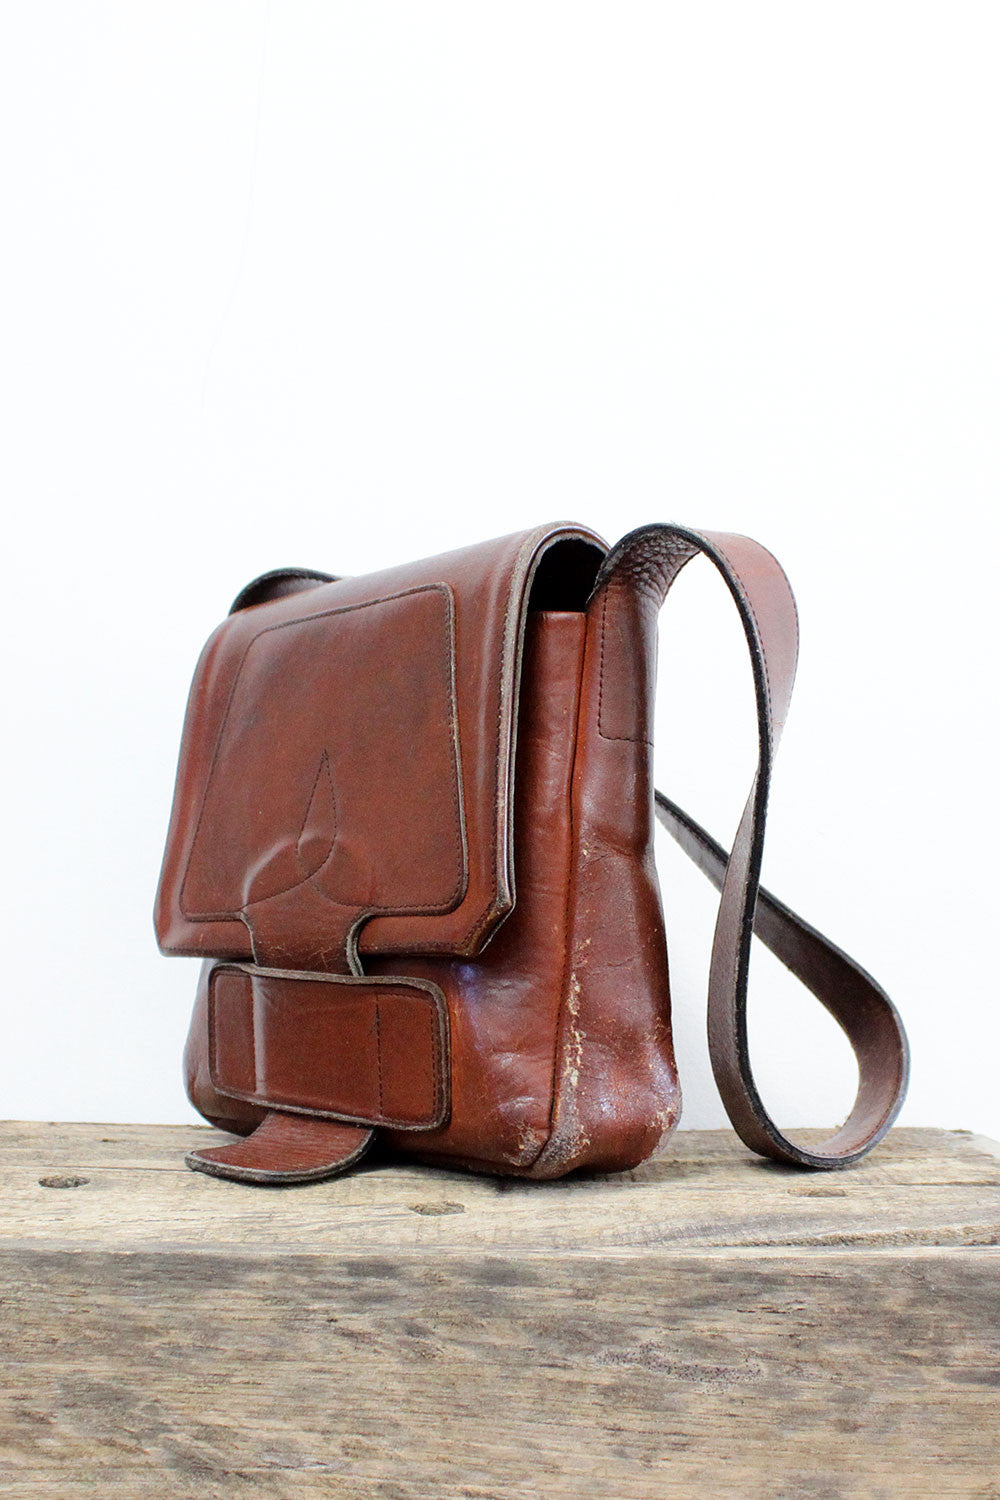 Vintage Leather Bag • Leather Saddle Bag • Vintage 70s Purse • Hippie Purse | eBay